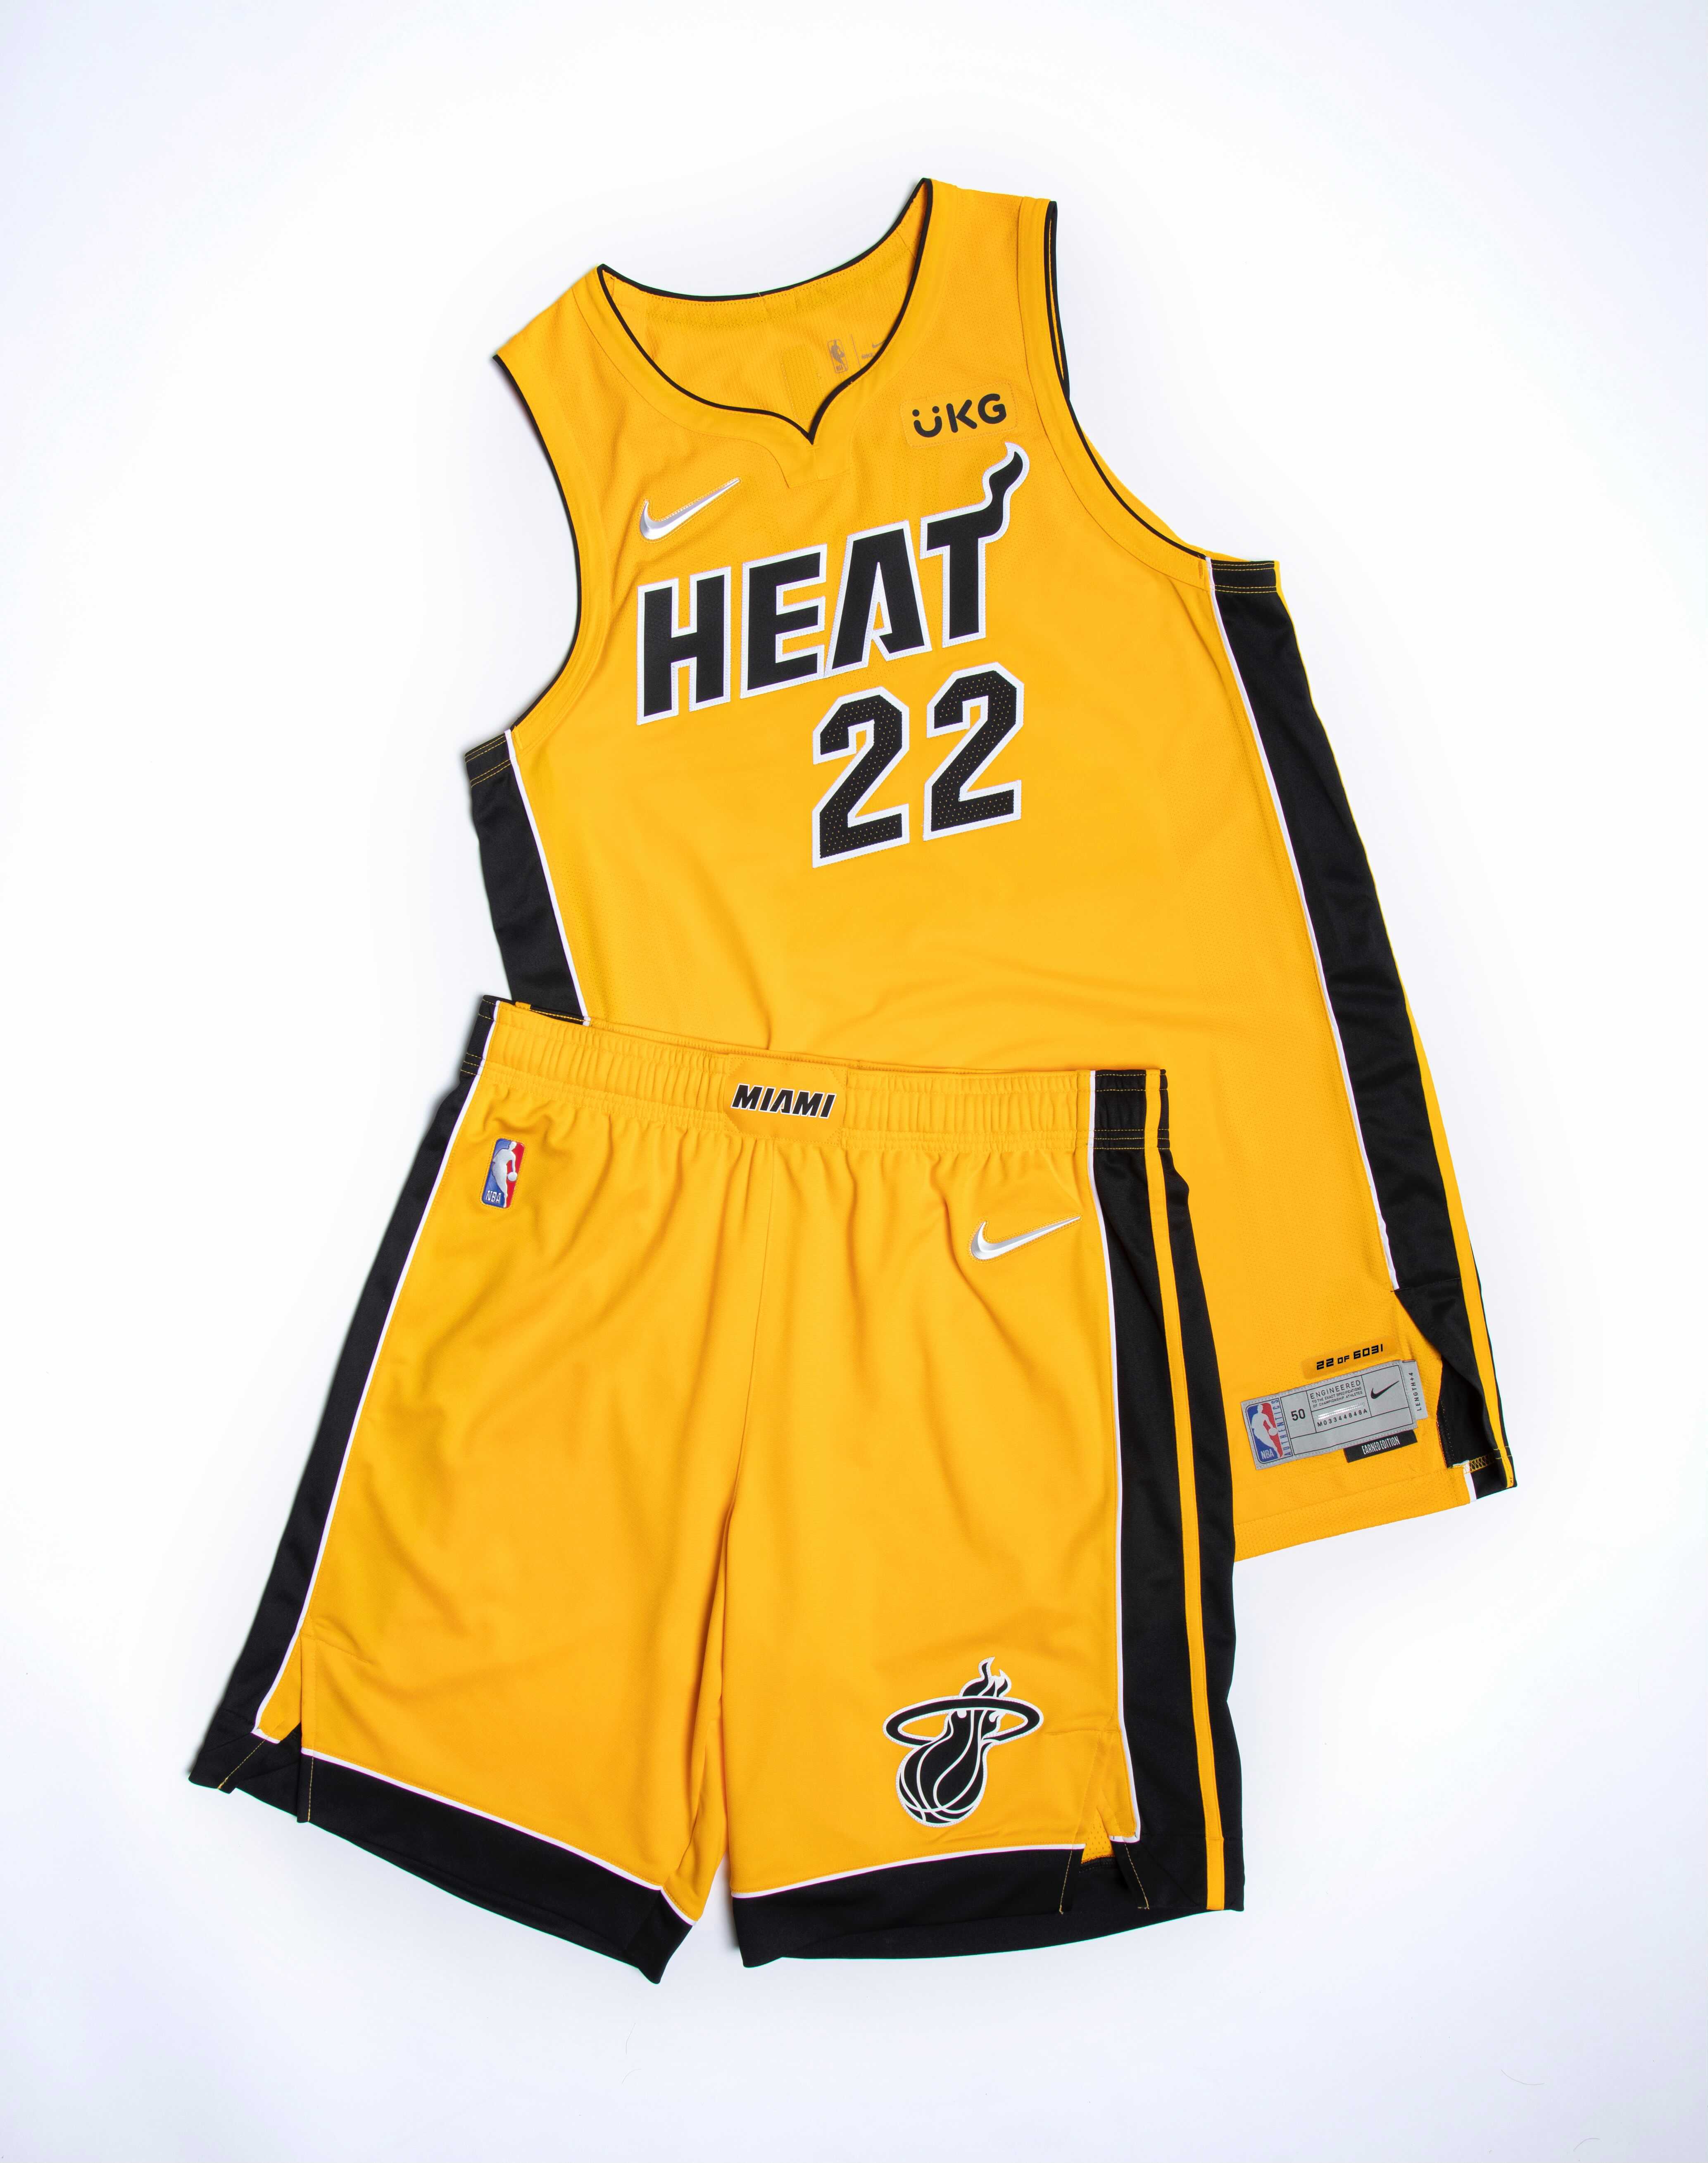 new heat jersey